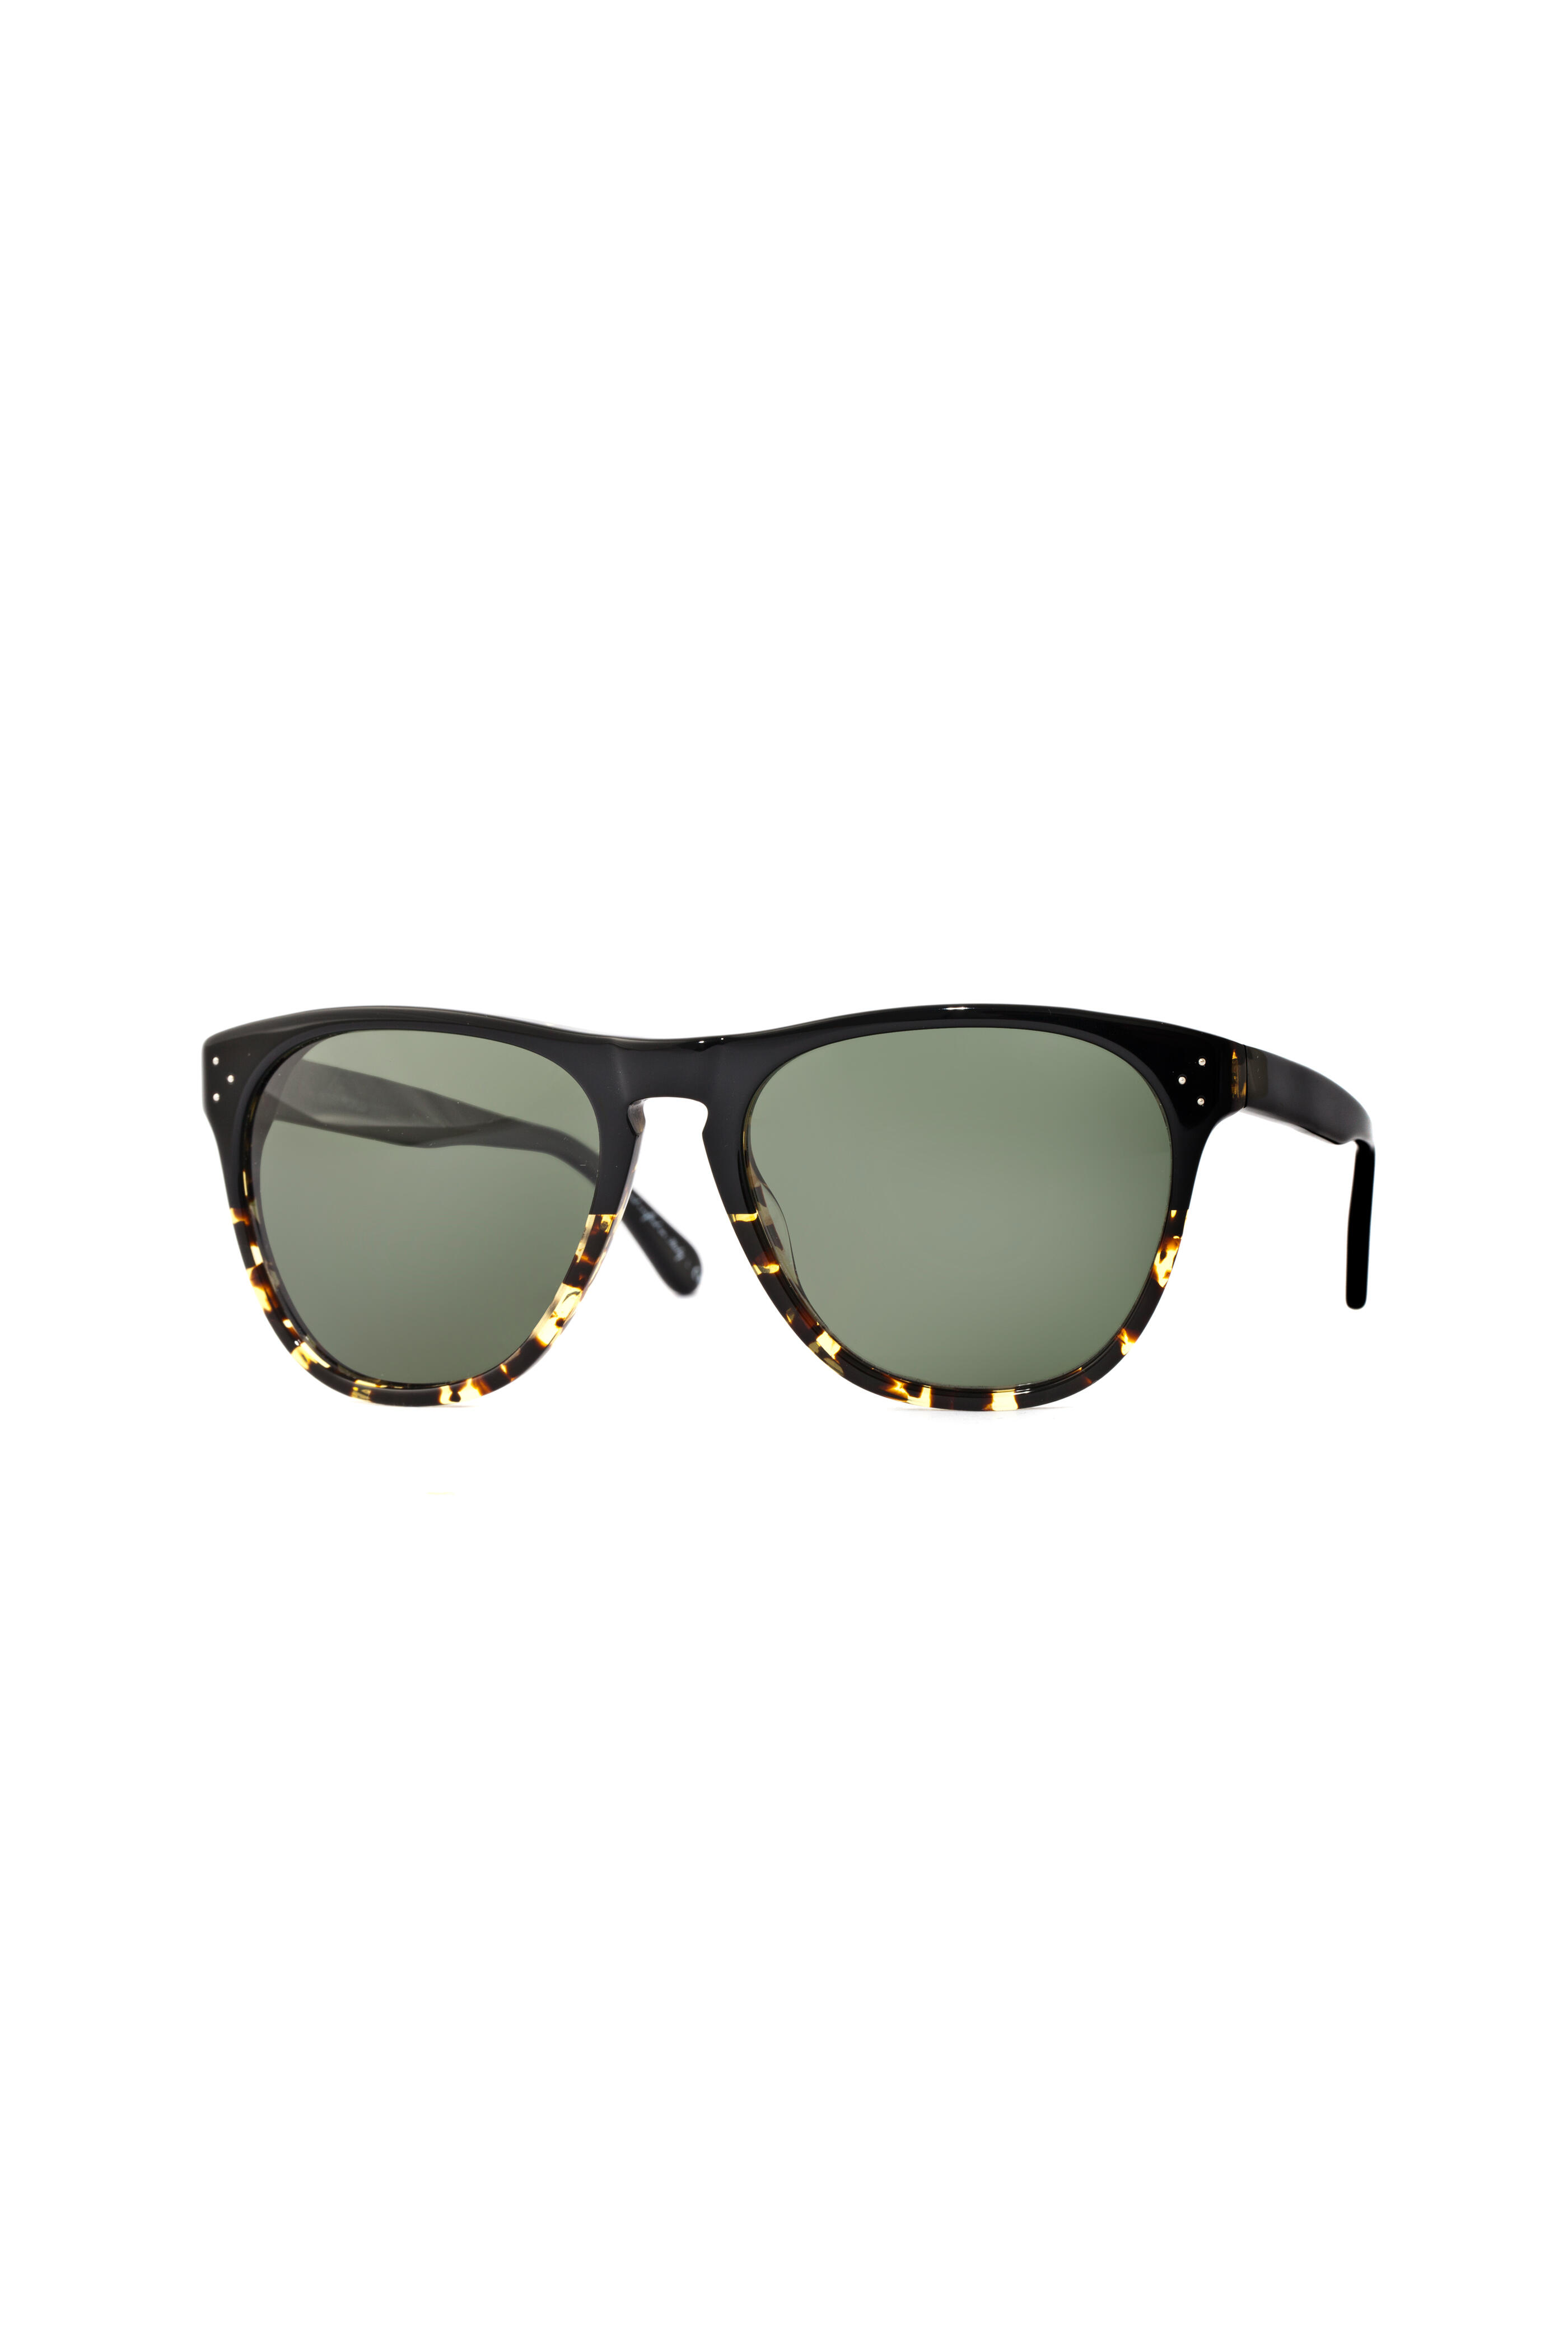 Oliver Peoples - Daddy B 58 Black Tortoise Sunglasses